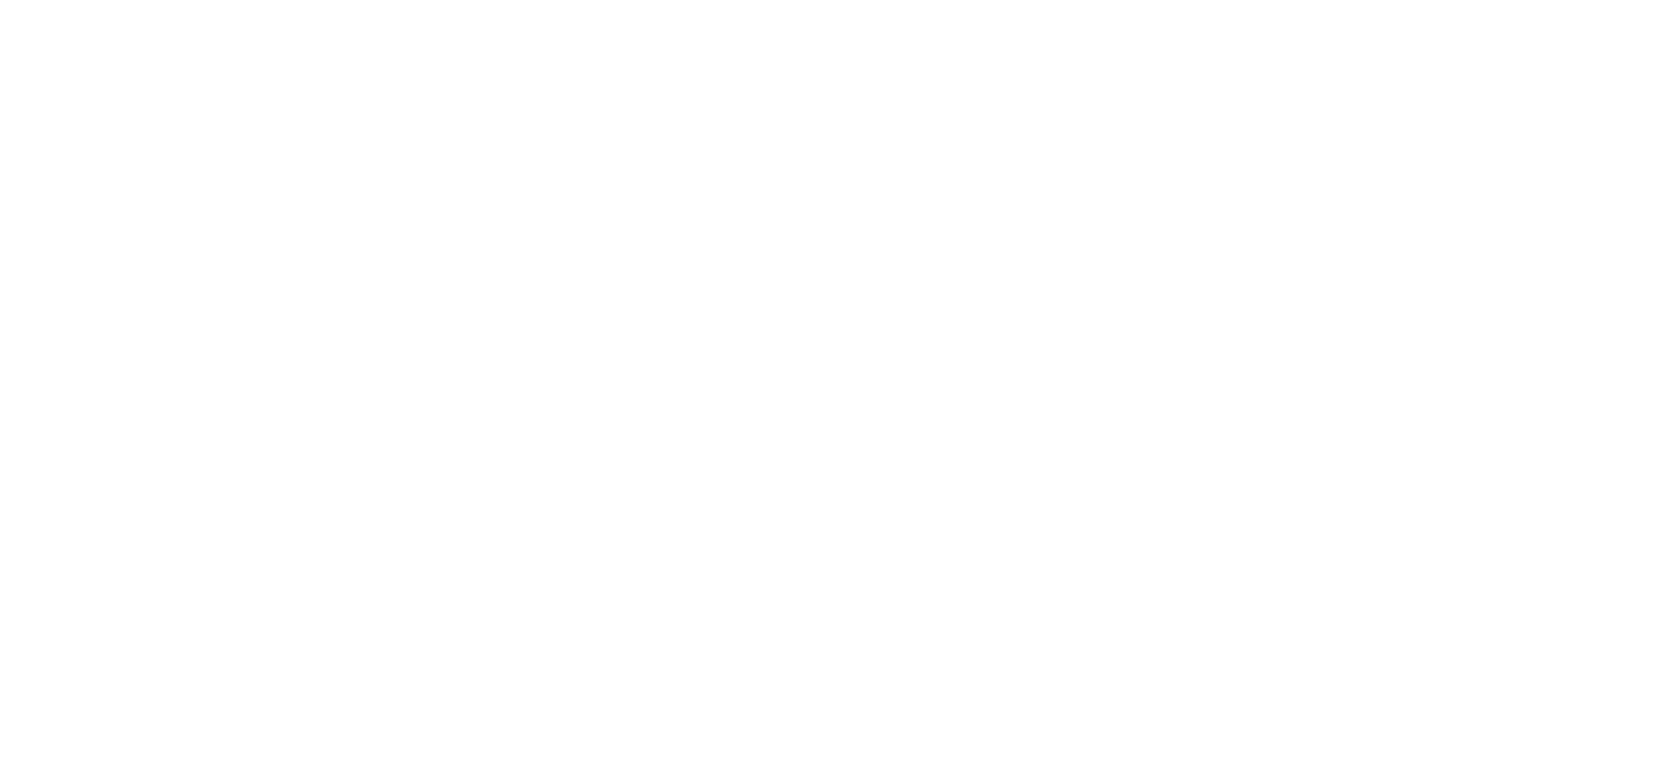 Scientific Literature-SciLit (Basel, Switzerland)